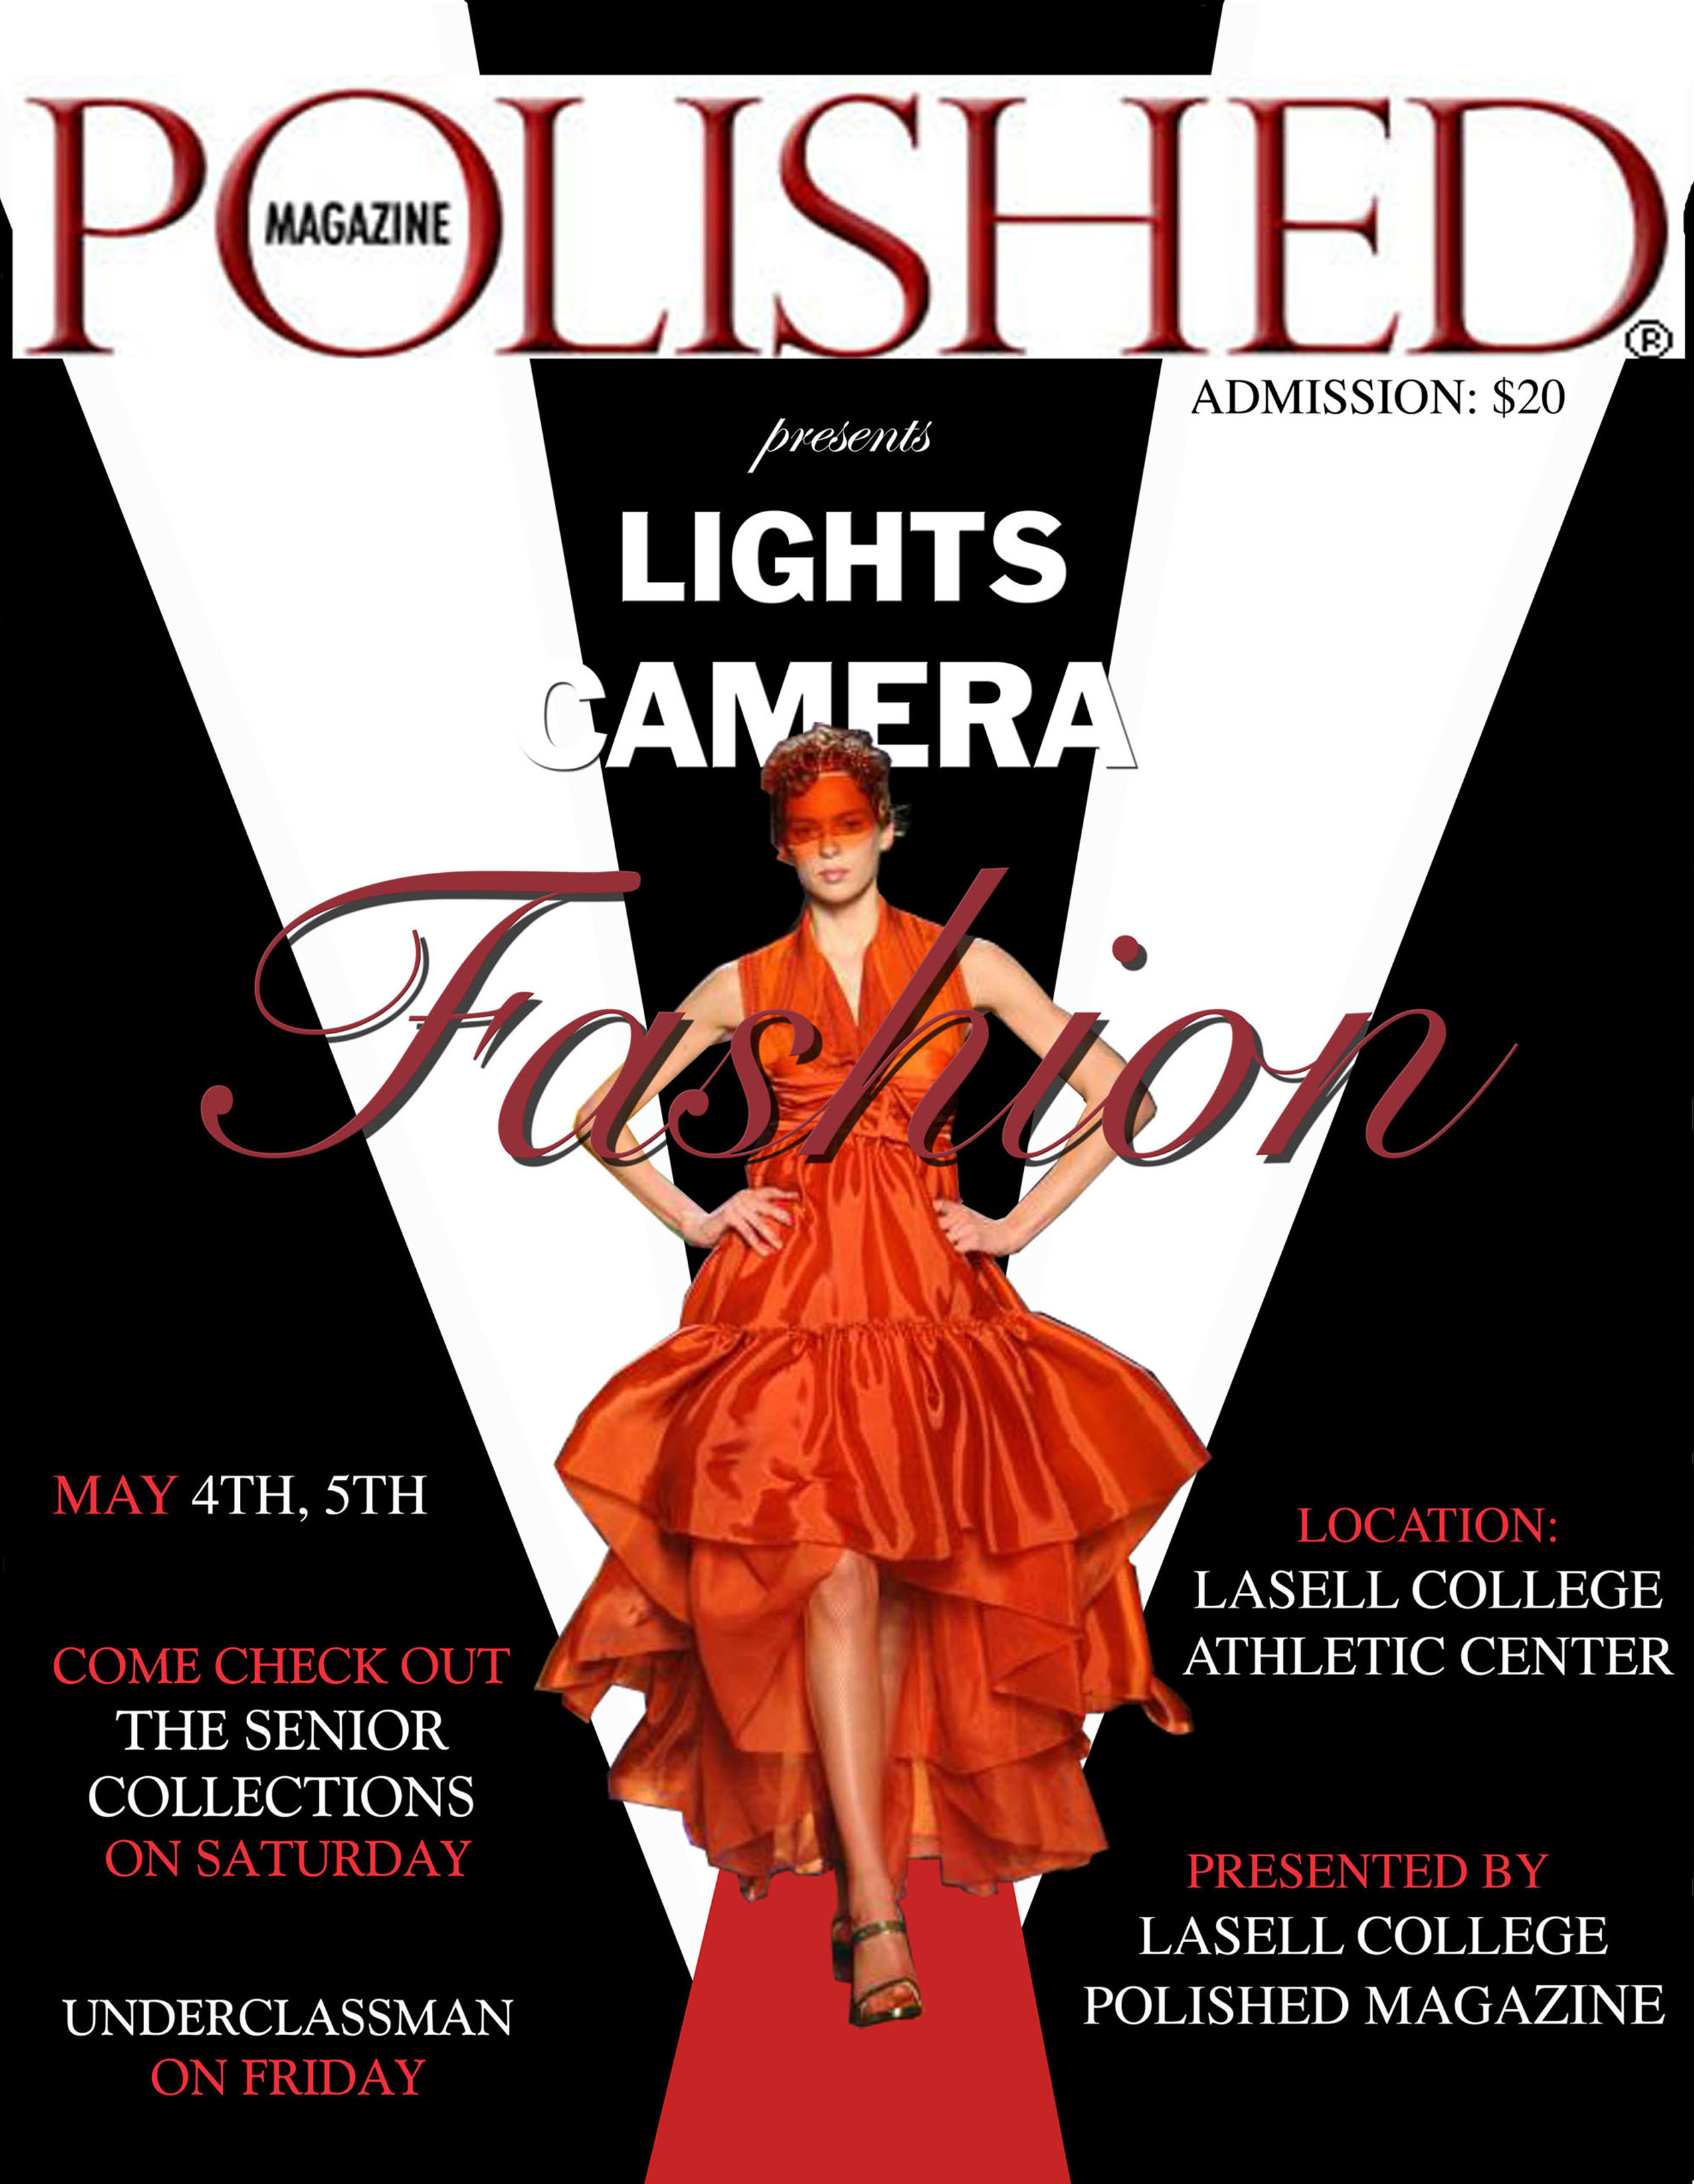 fashion show poster